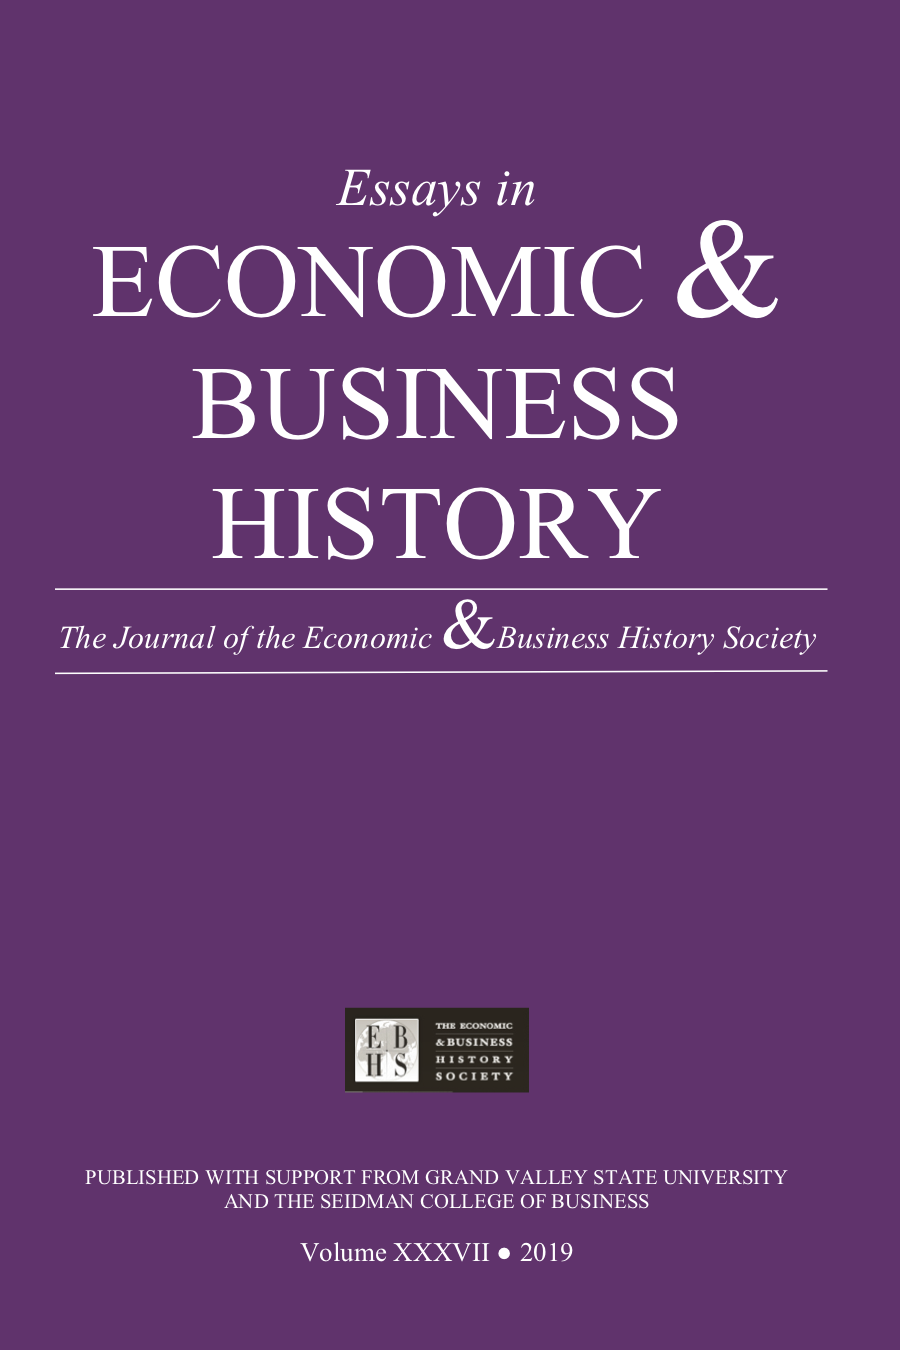 Essays in Economic & Business History 2019